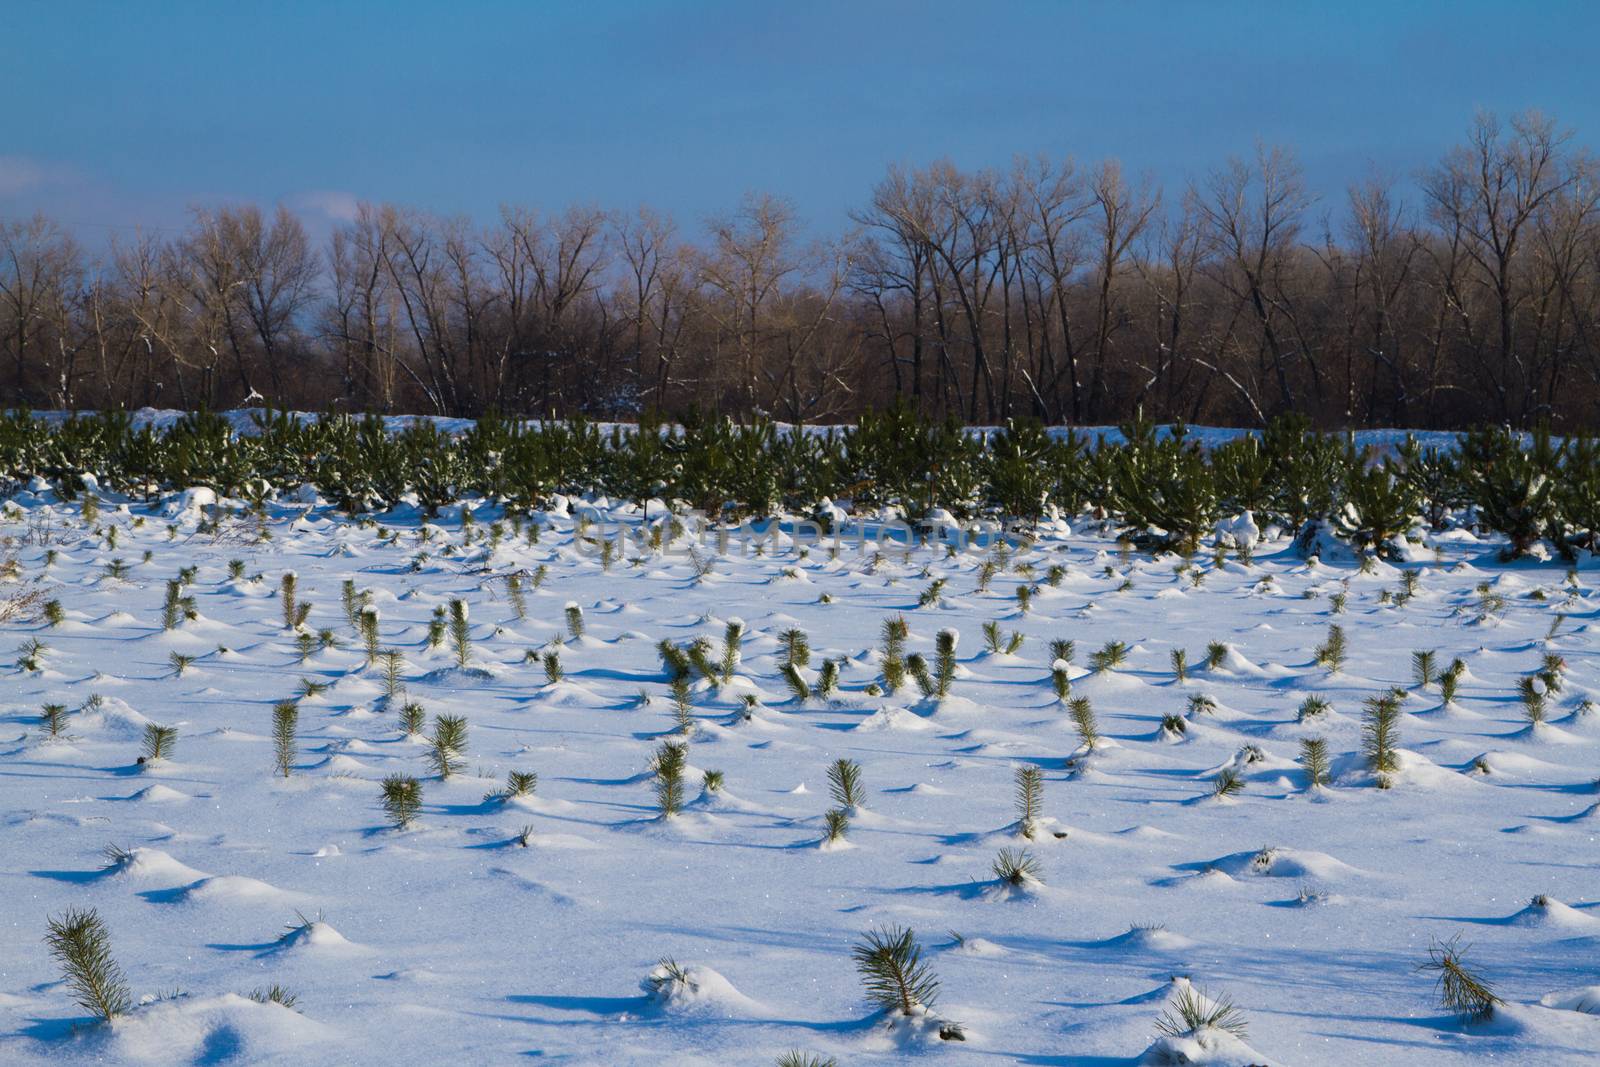 Fir trees in winter snow by grigorenko